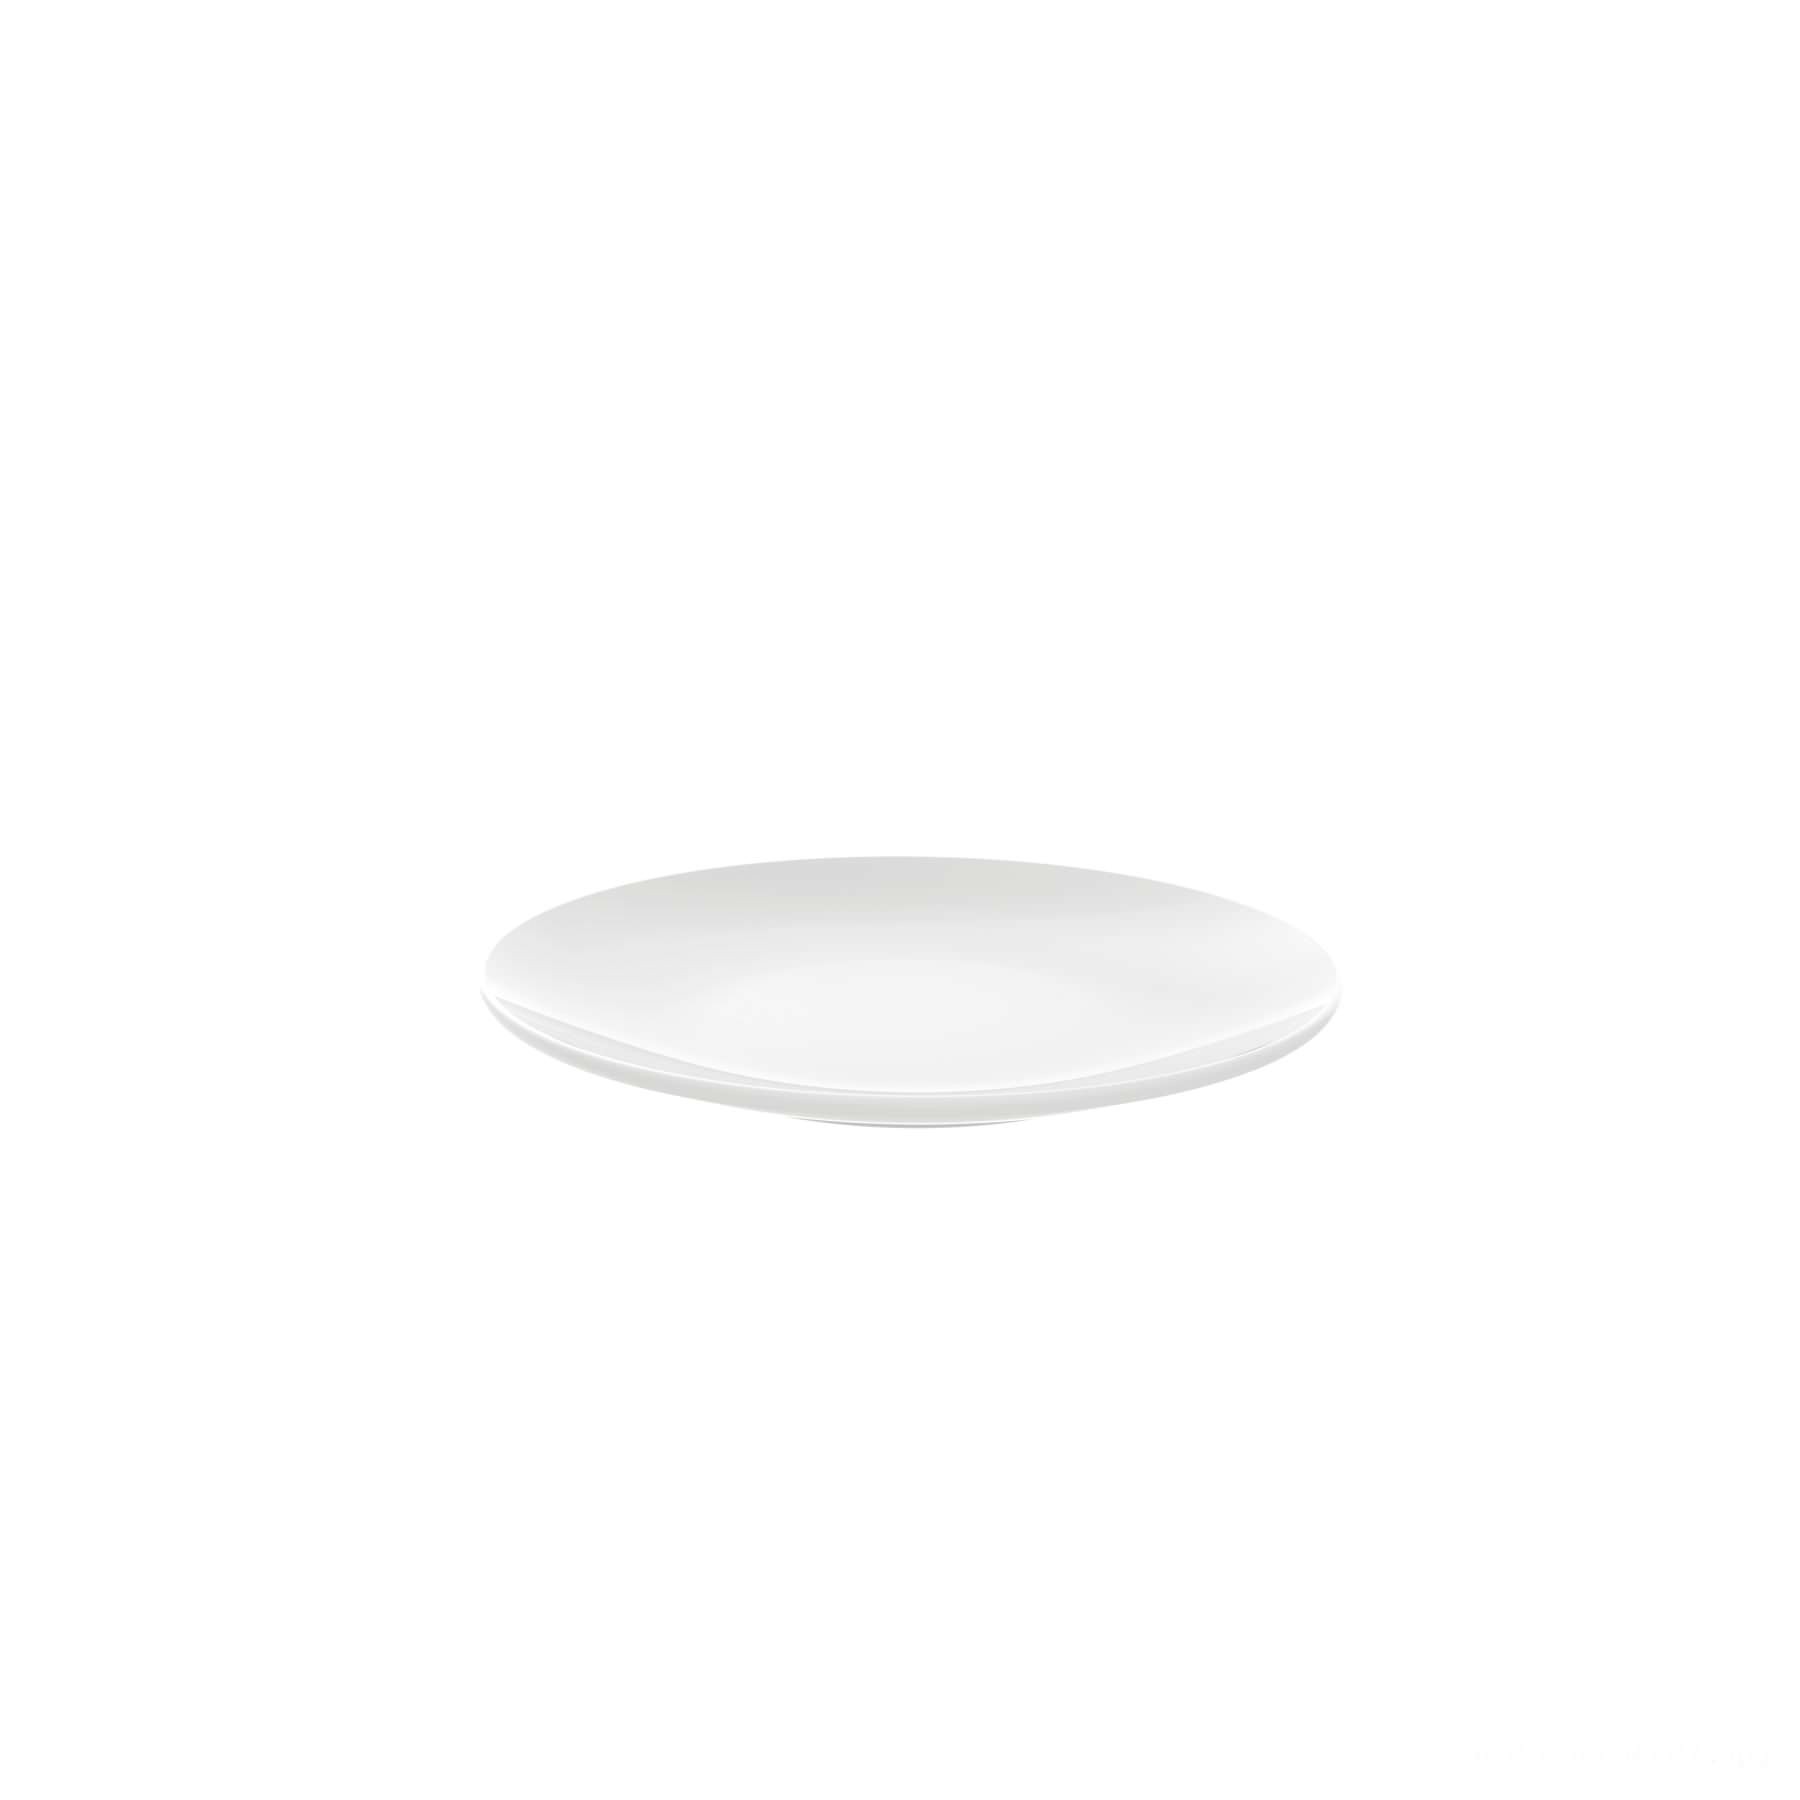 Prato Sobremesa Leonora em Porcelana Branca 19 cm